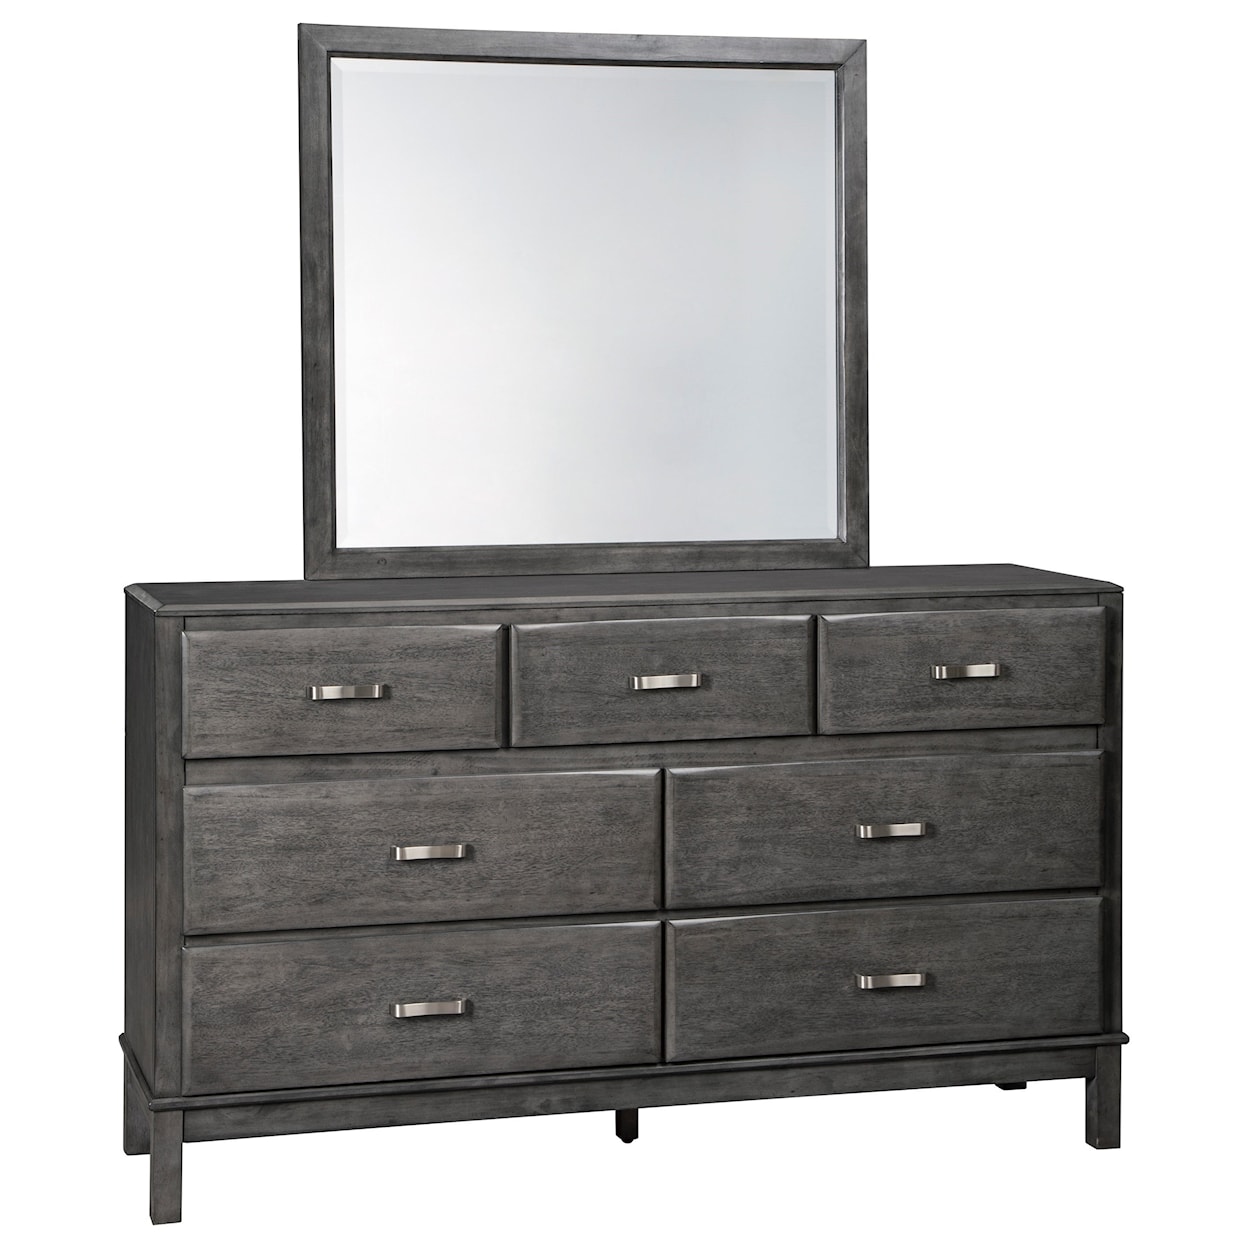 Ashley Furniture Signature Design Caitbrook Dresser and Mirror Set